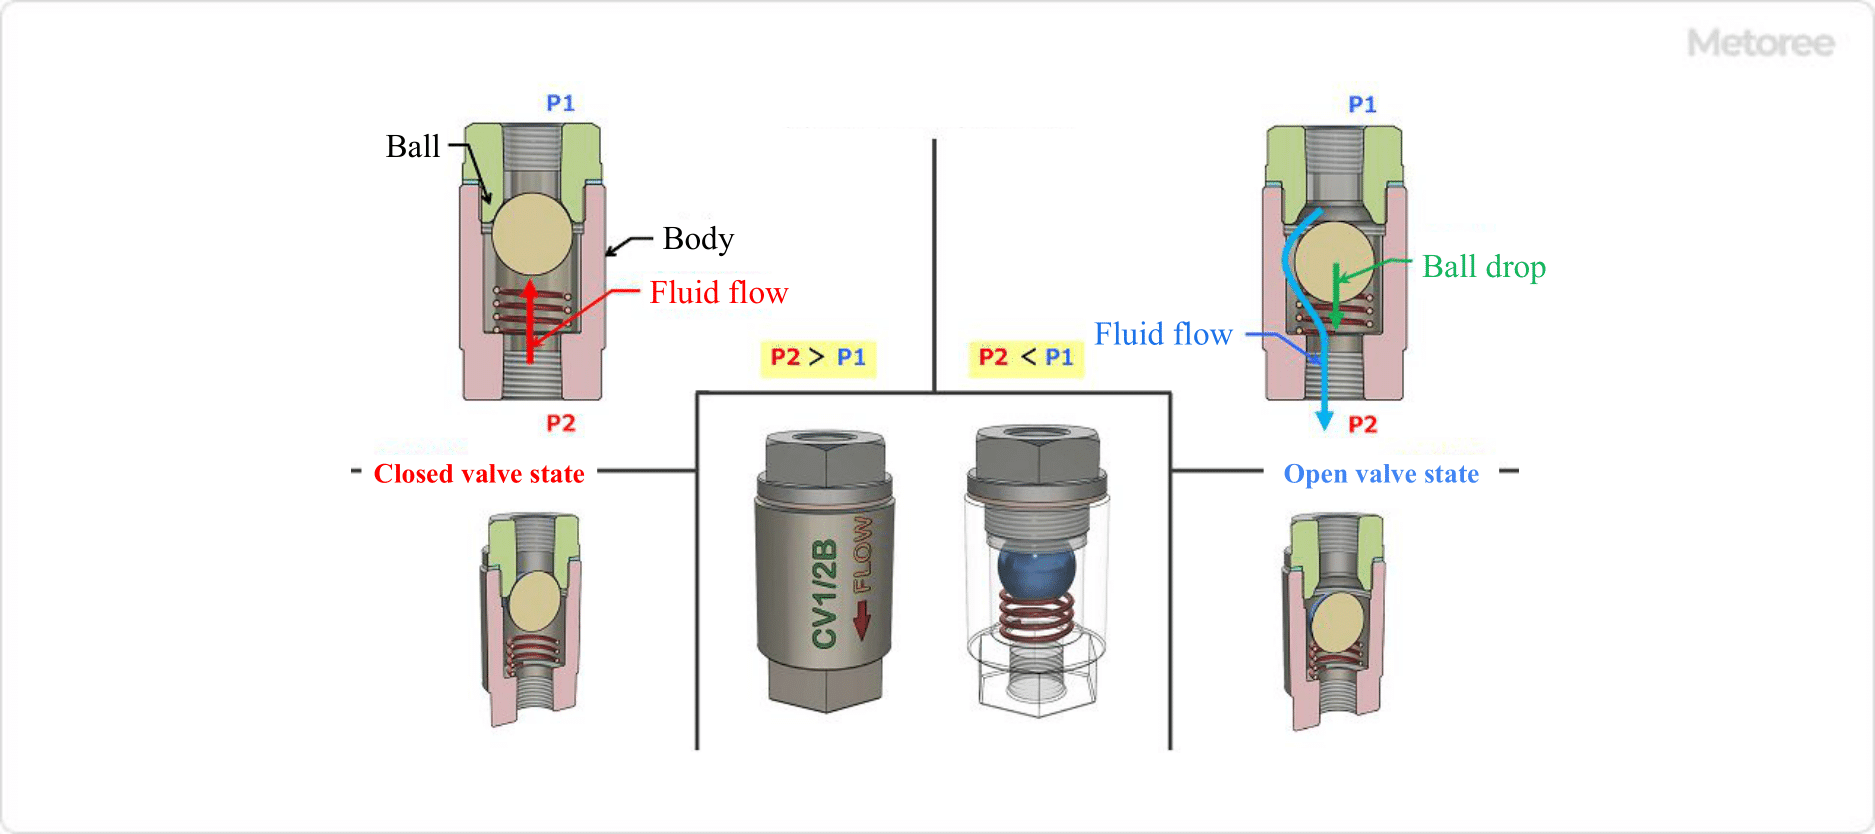 Figure 4. Ball check valve